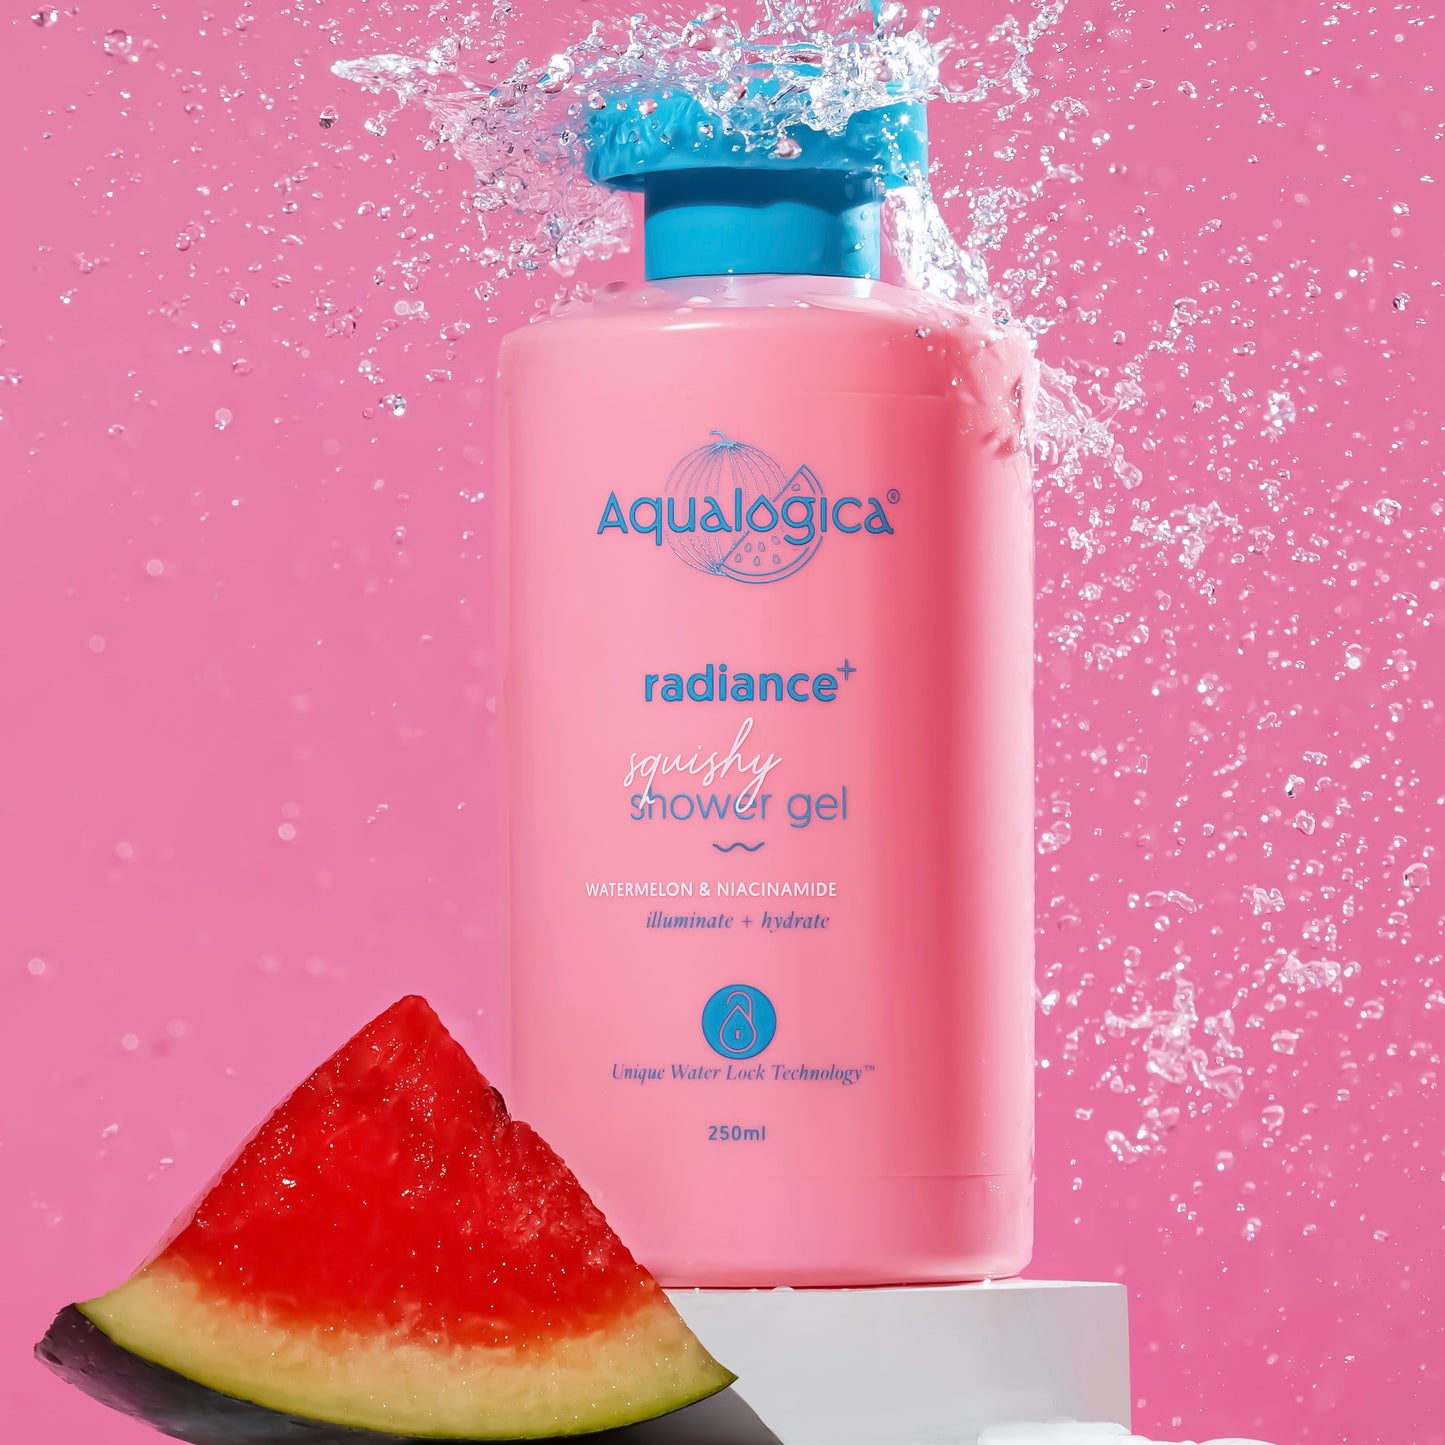 Radiance+ Squishy Shower Gel with Watermelon & Niacinamide for Radiant Skin - 250ml